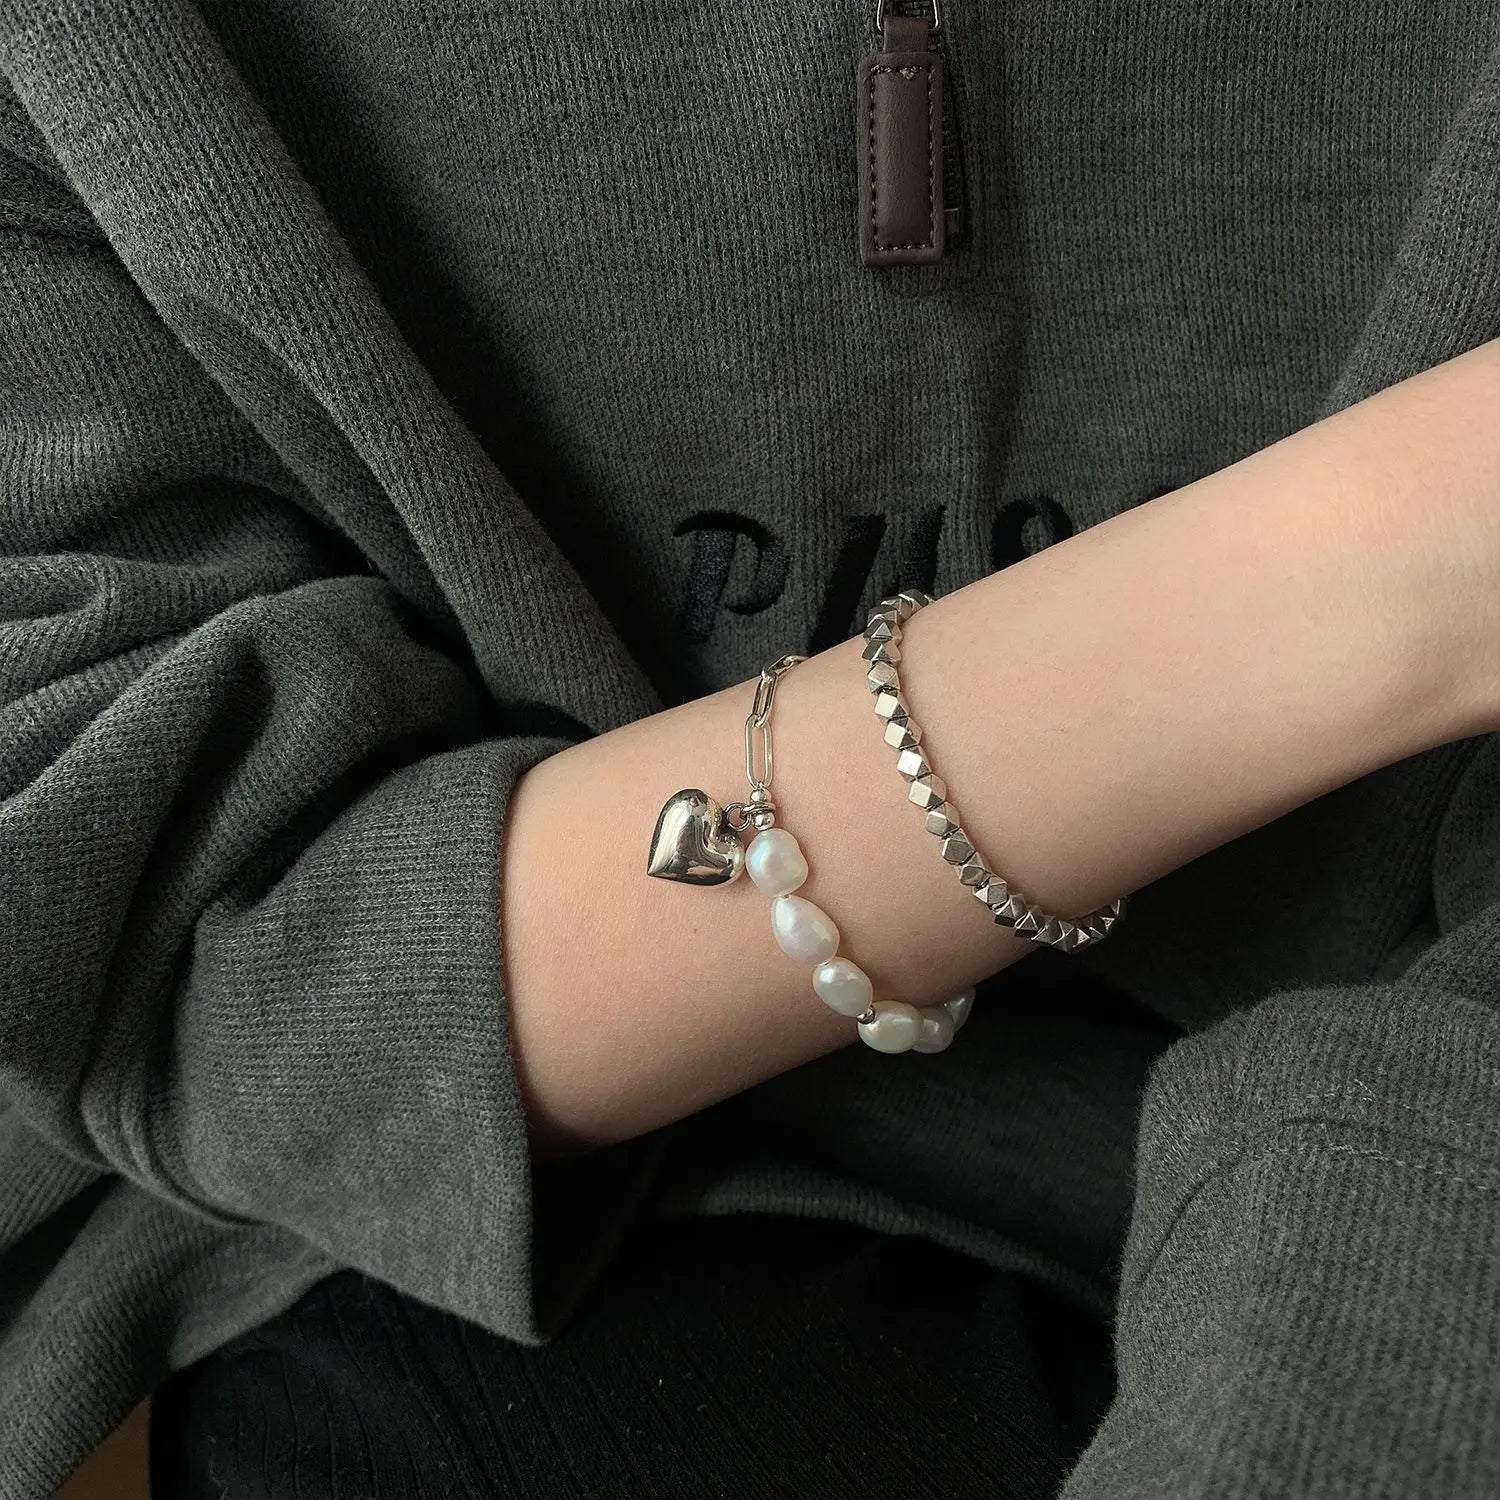 925 Sterling Silver Ladies Hearts Bracelets - Vogue J'adore